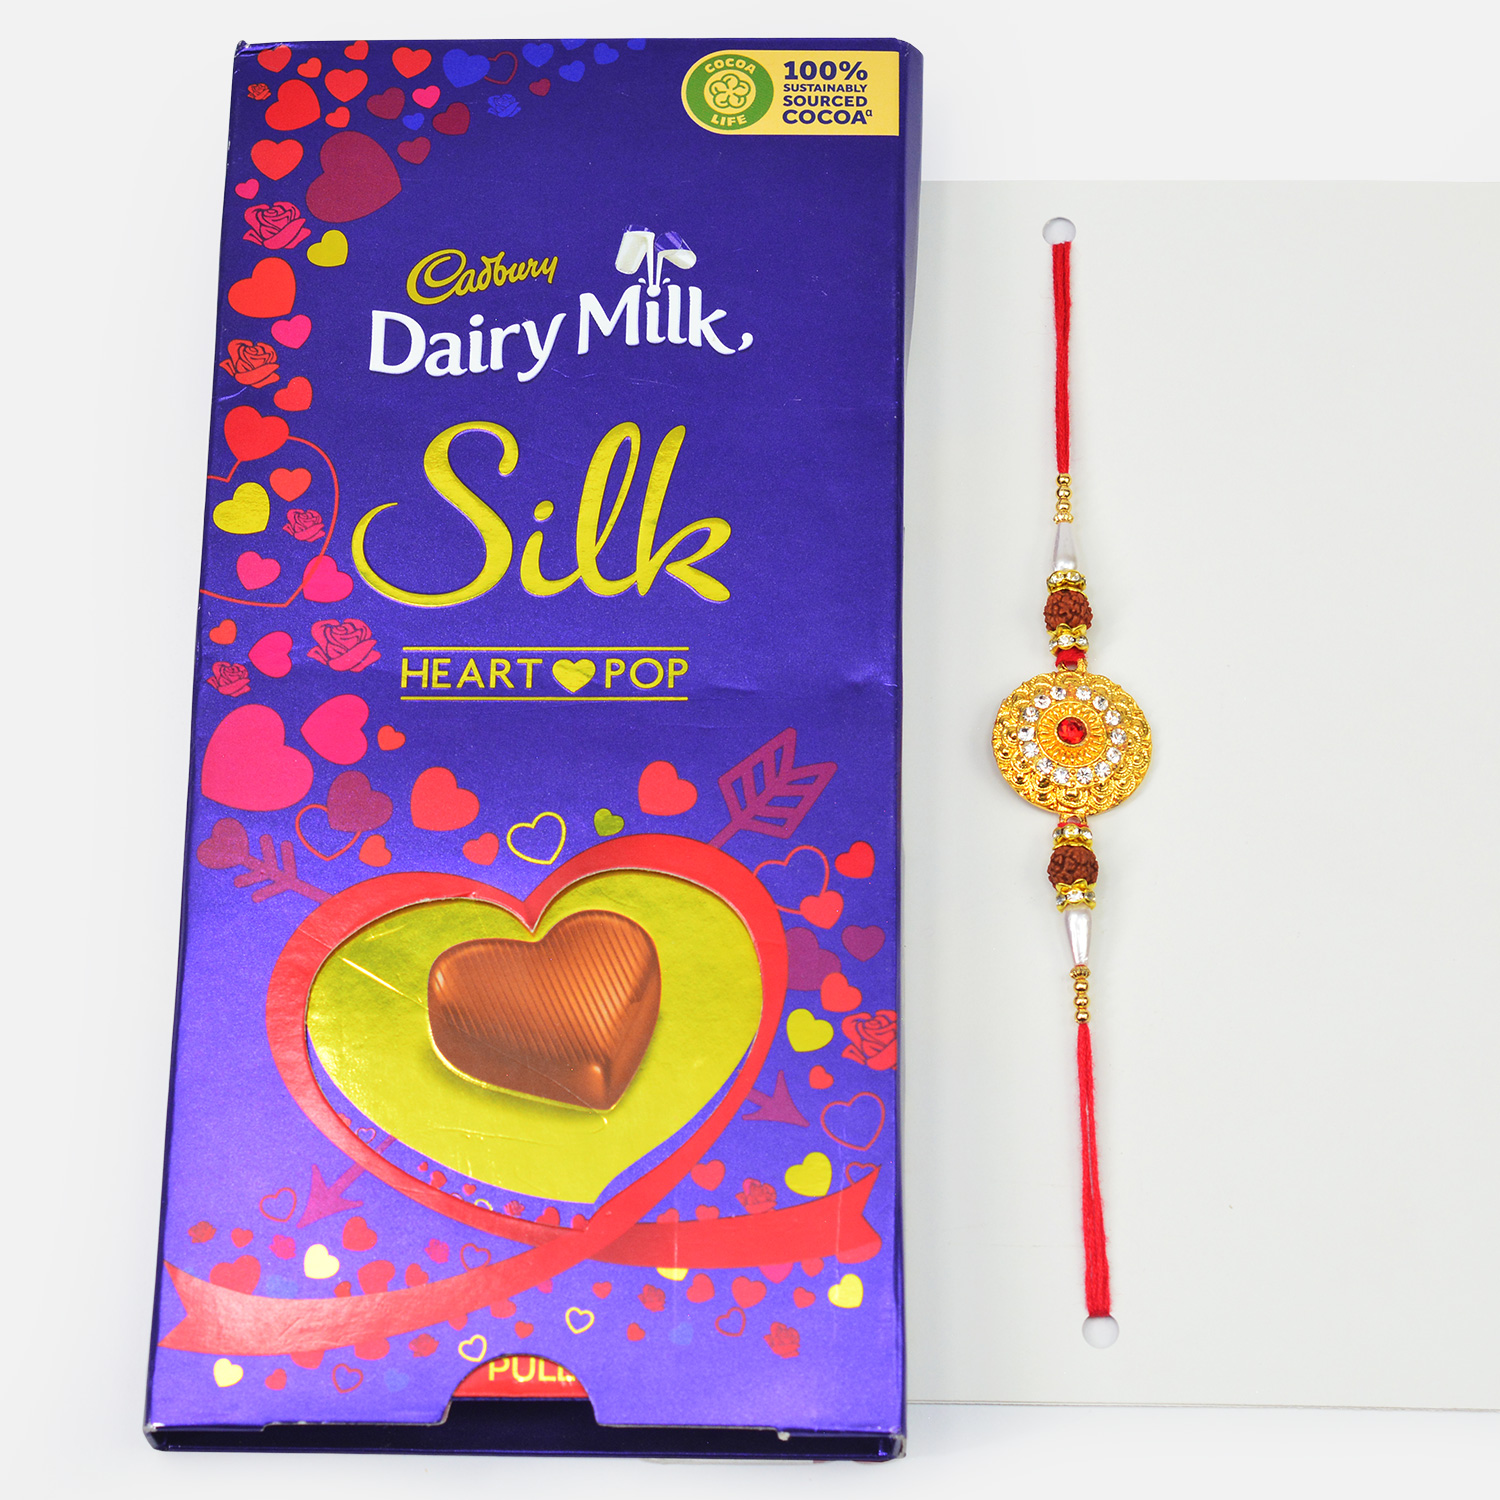 Dairy Milk Heart Pop Chocolate with Golden coin Type Bhai Rakhi